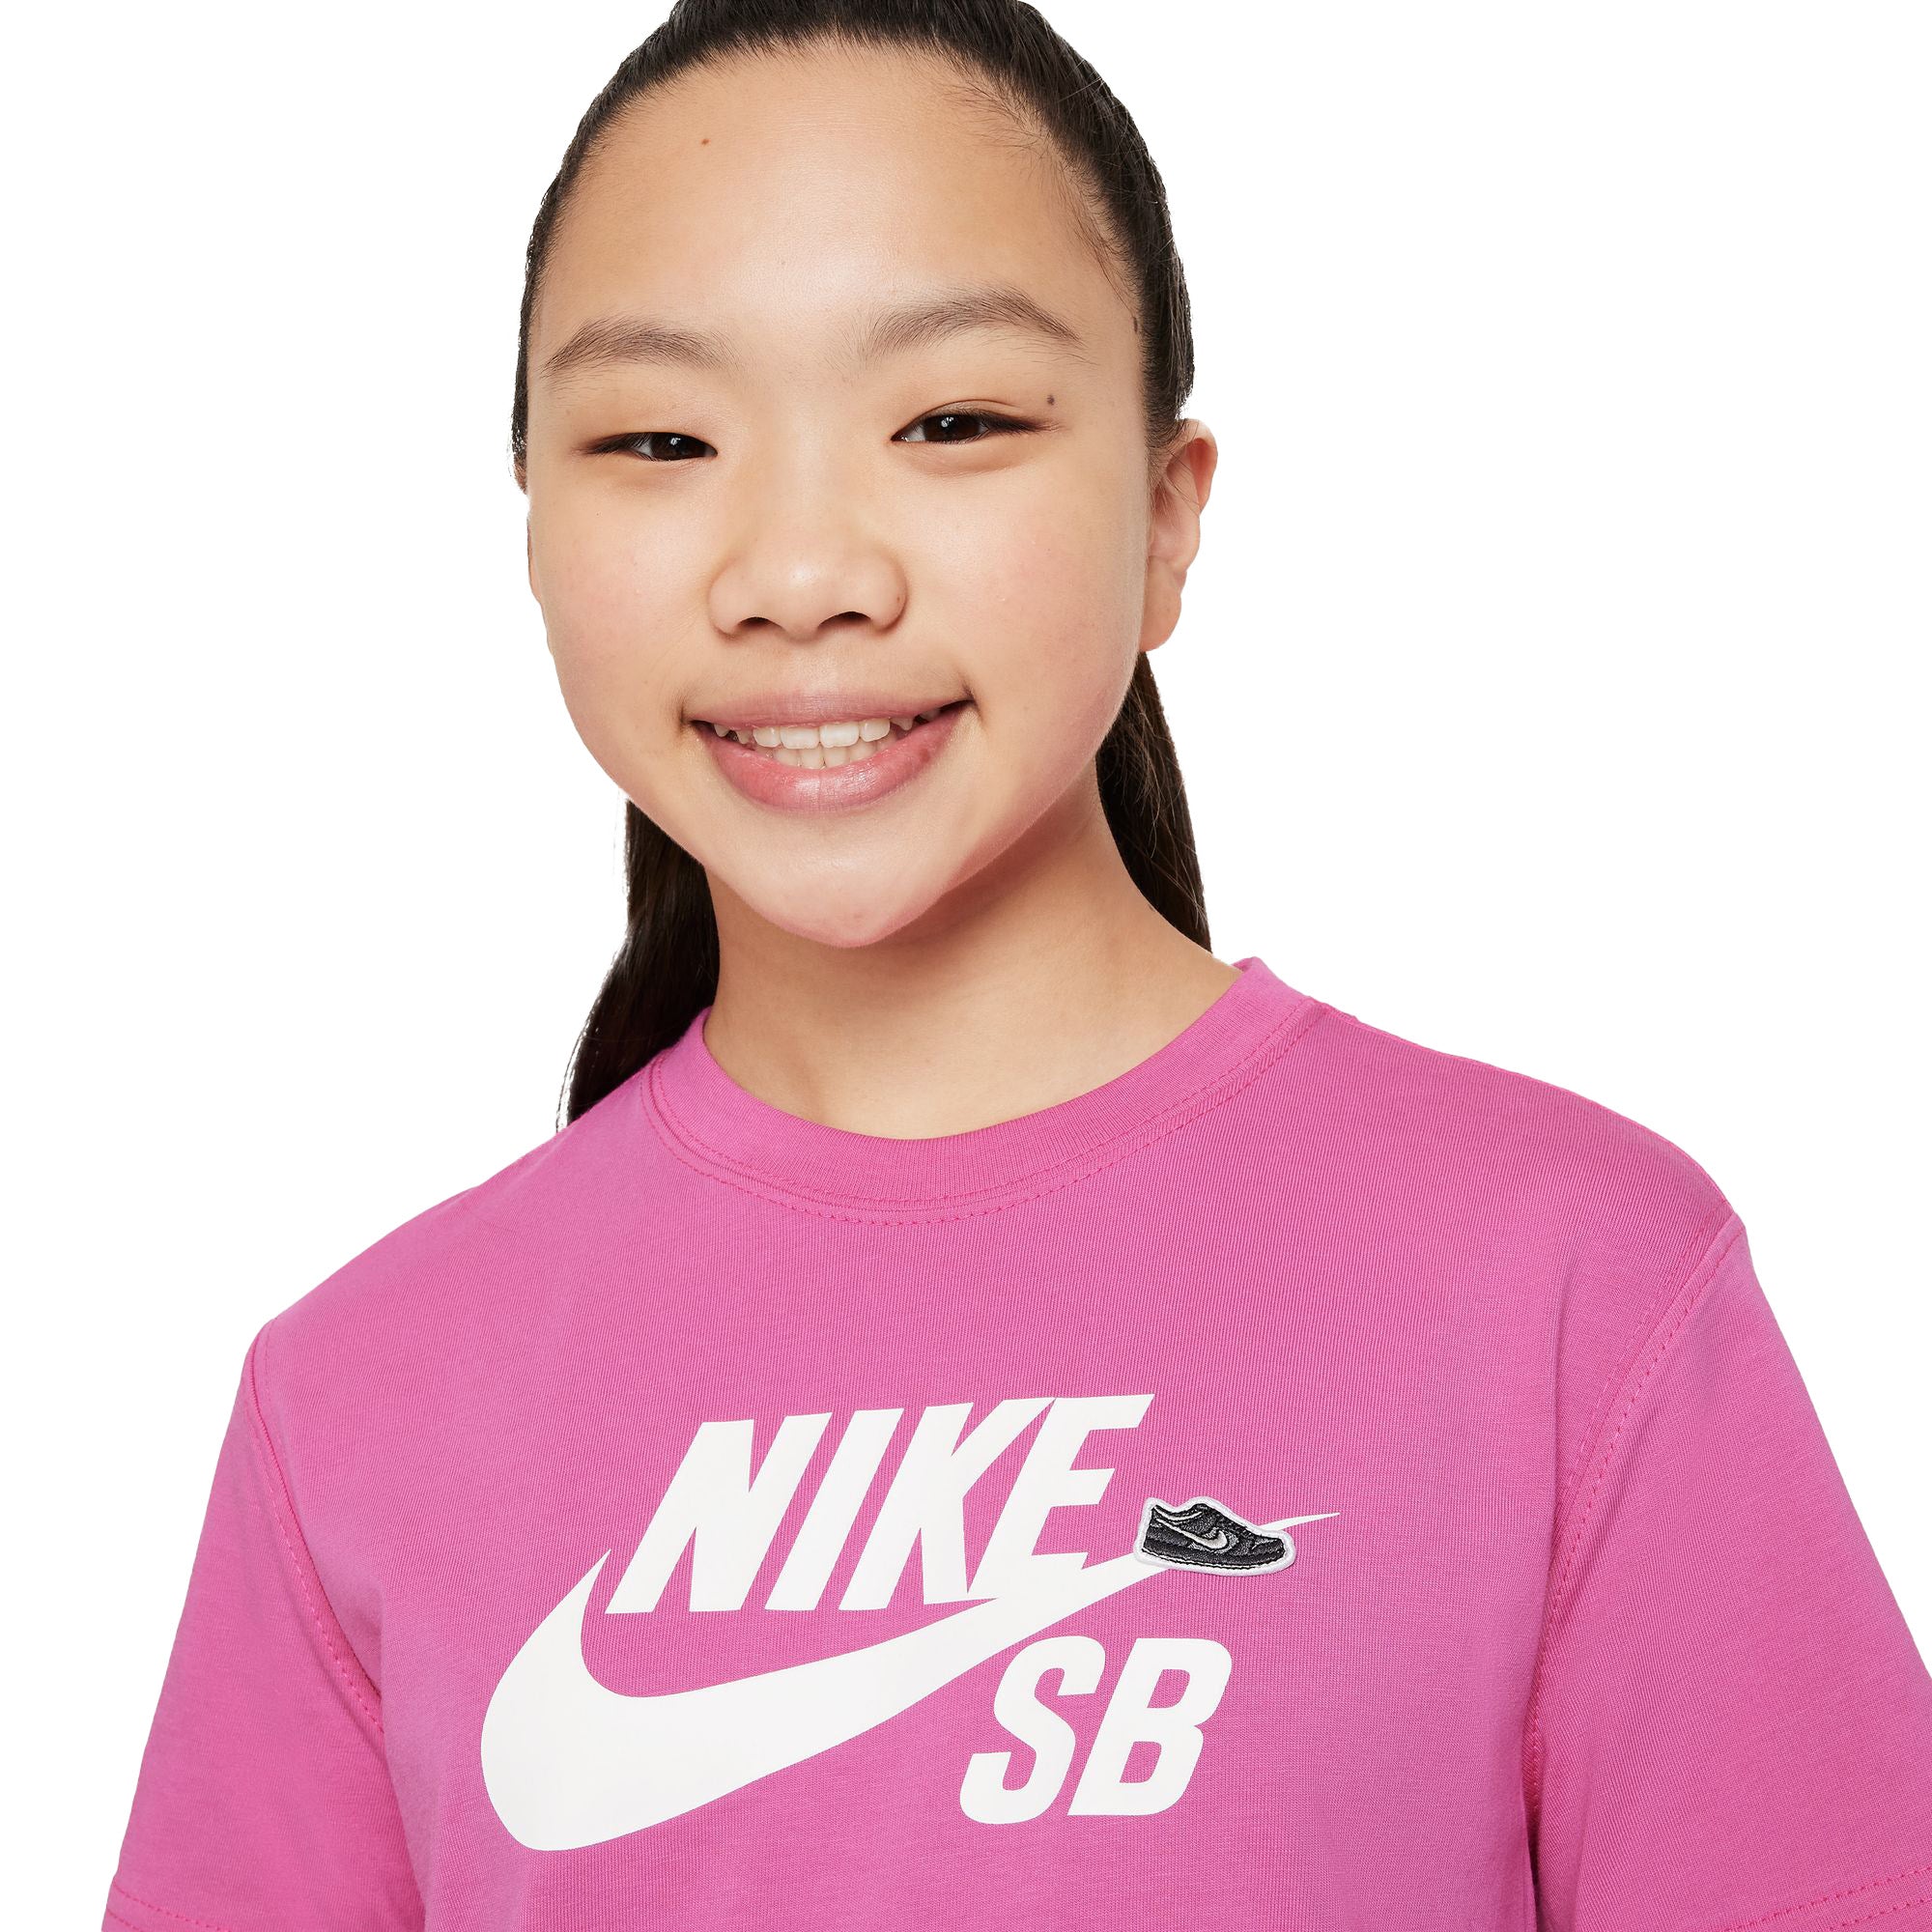 Nike SB Big Kids' T-Shirt Alchemy Pink